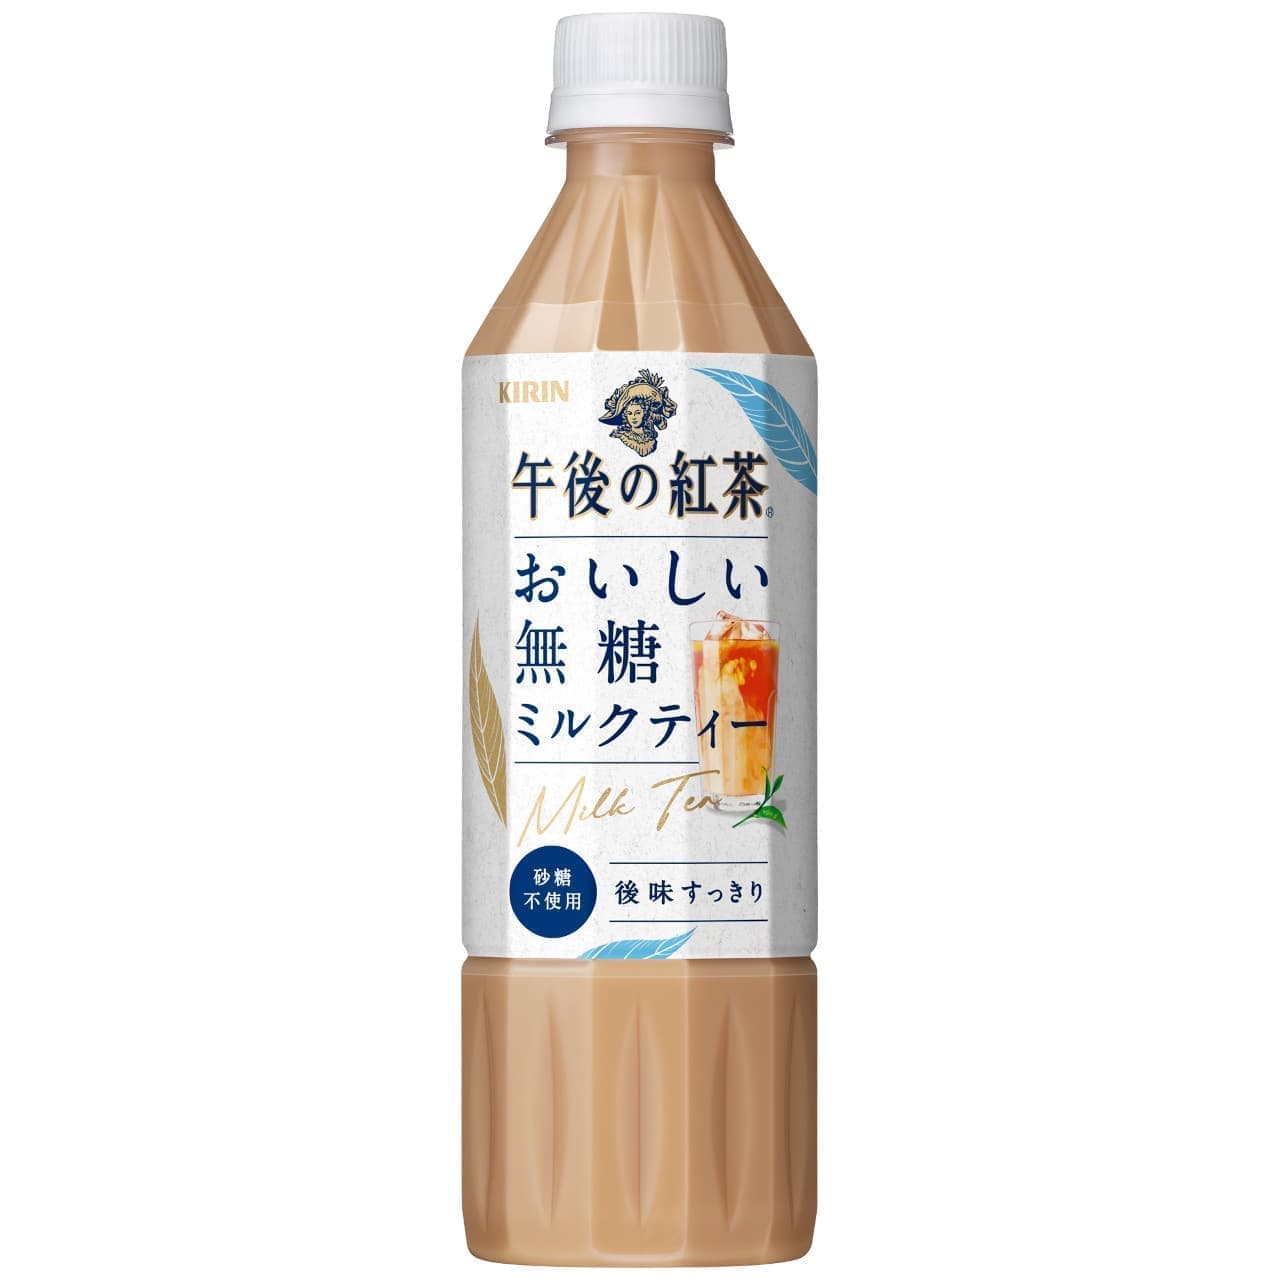 Kirin Beverage "Kirin Gogo-no-Kocha Oishii Unsweetened Milk Tea